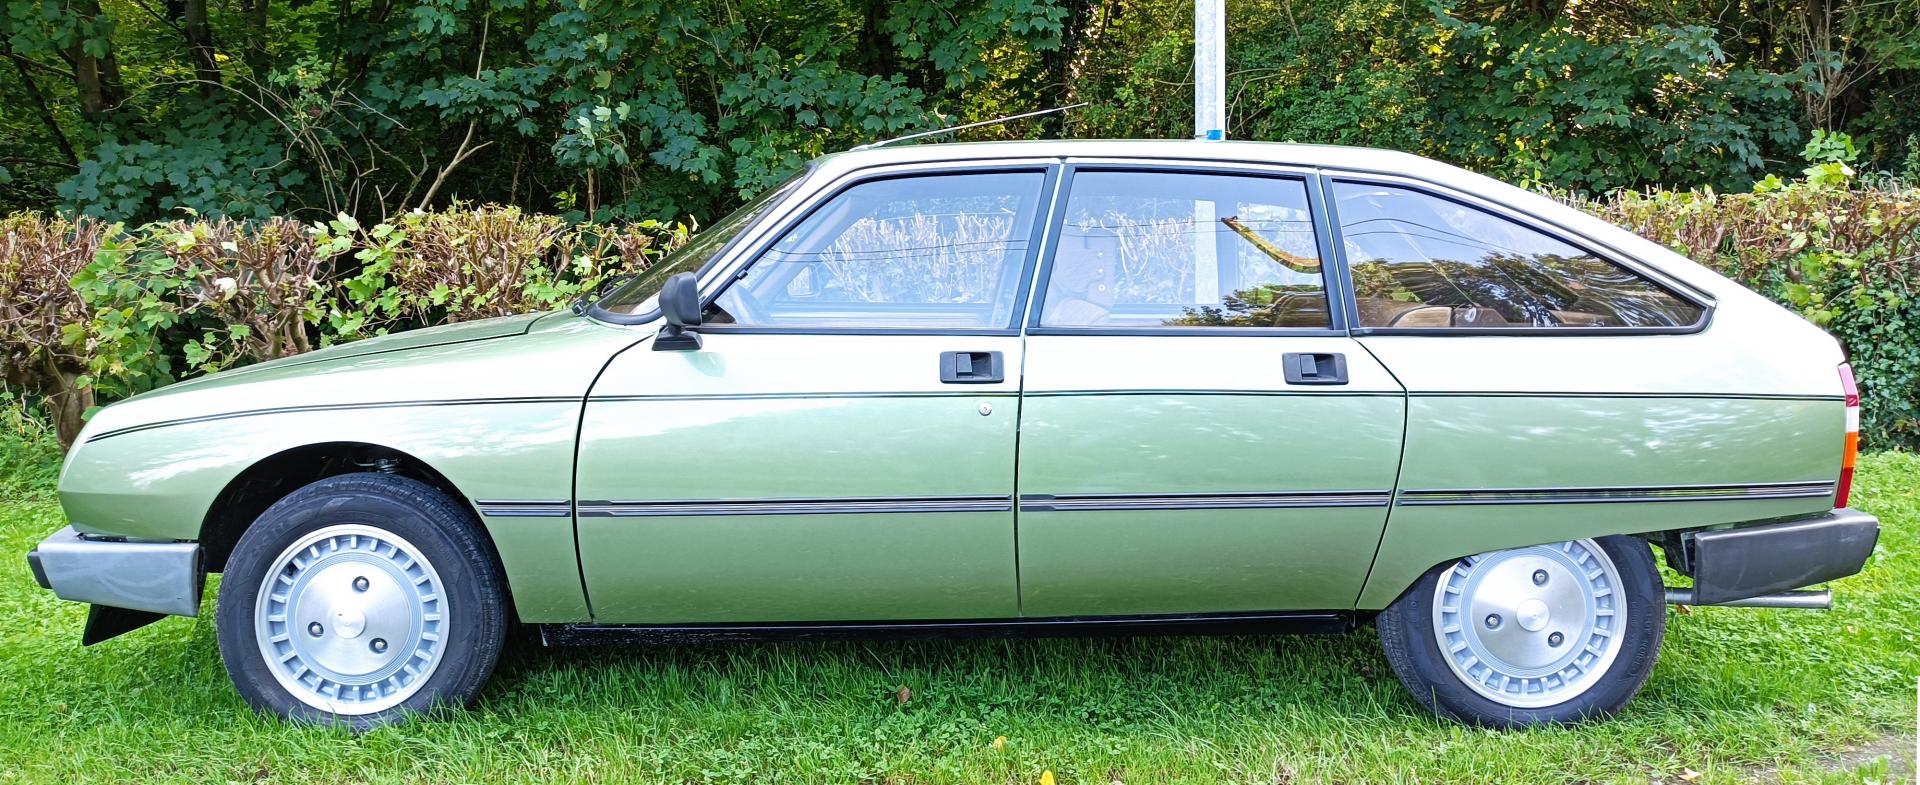 1982 Citroën GSA Pallas 3